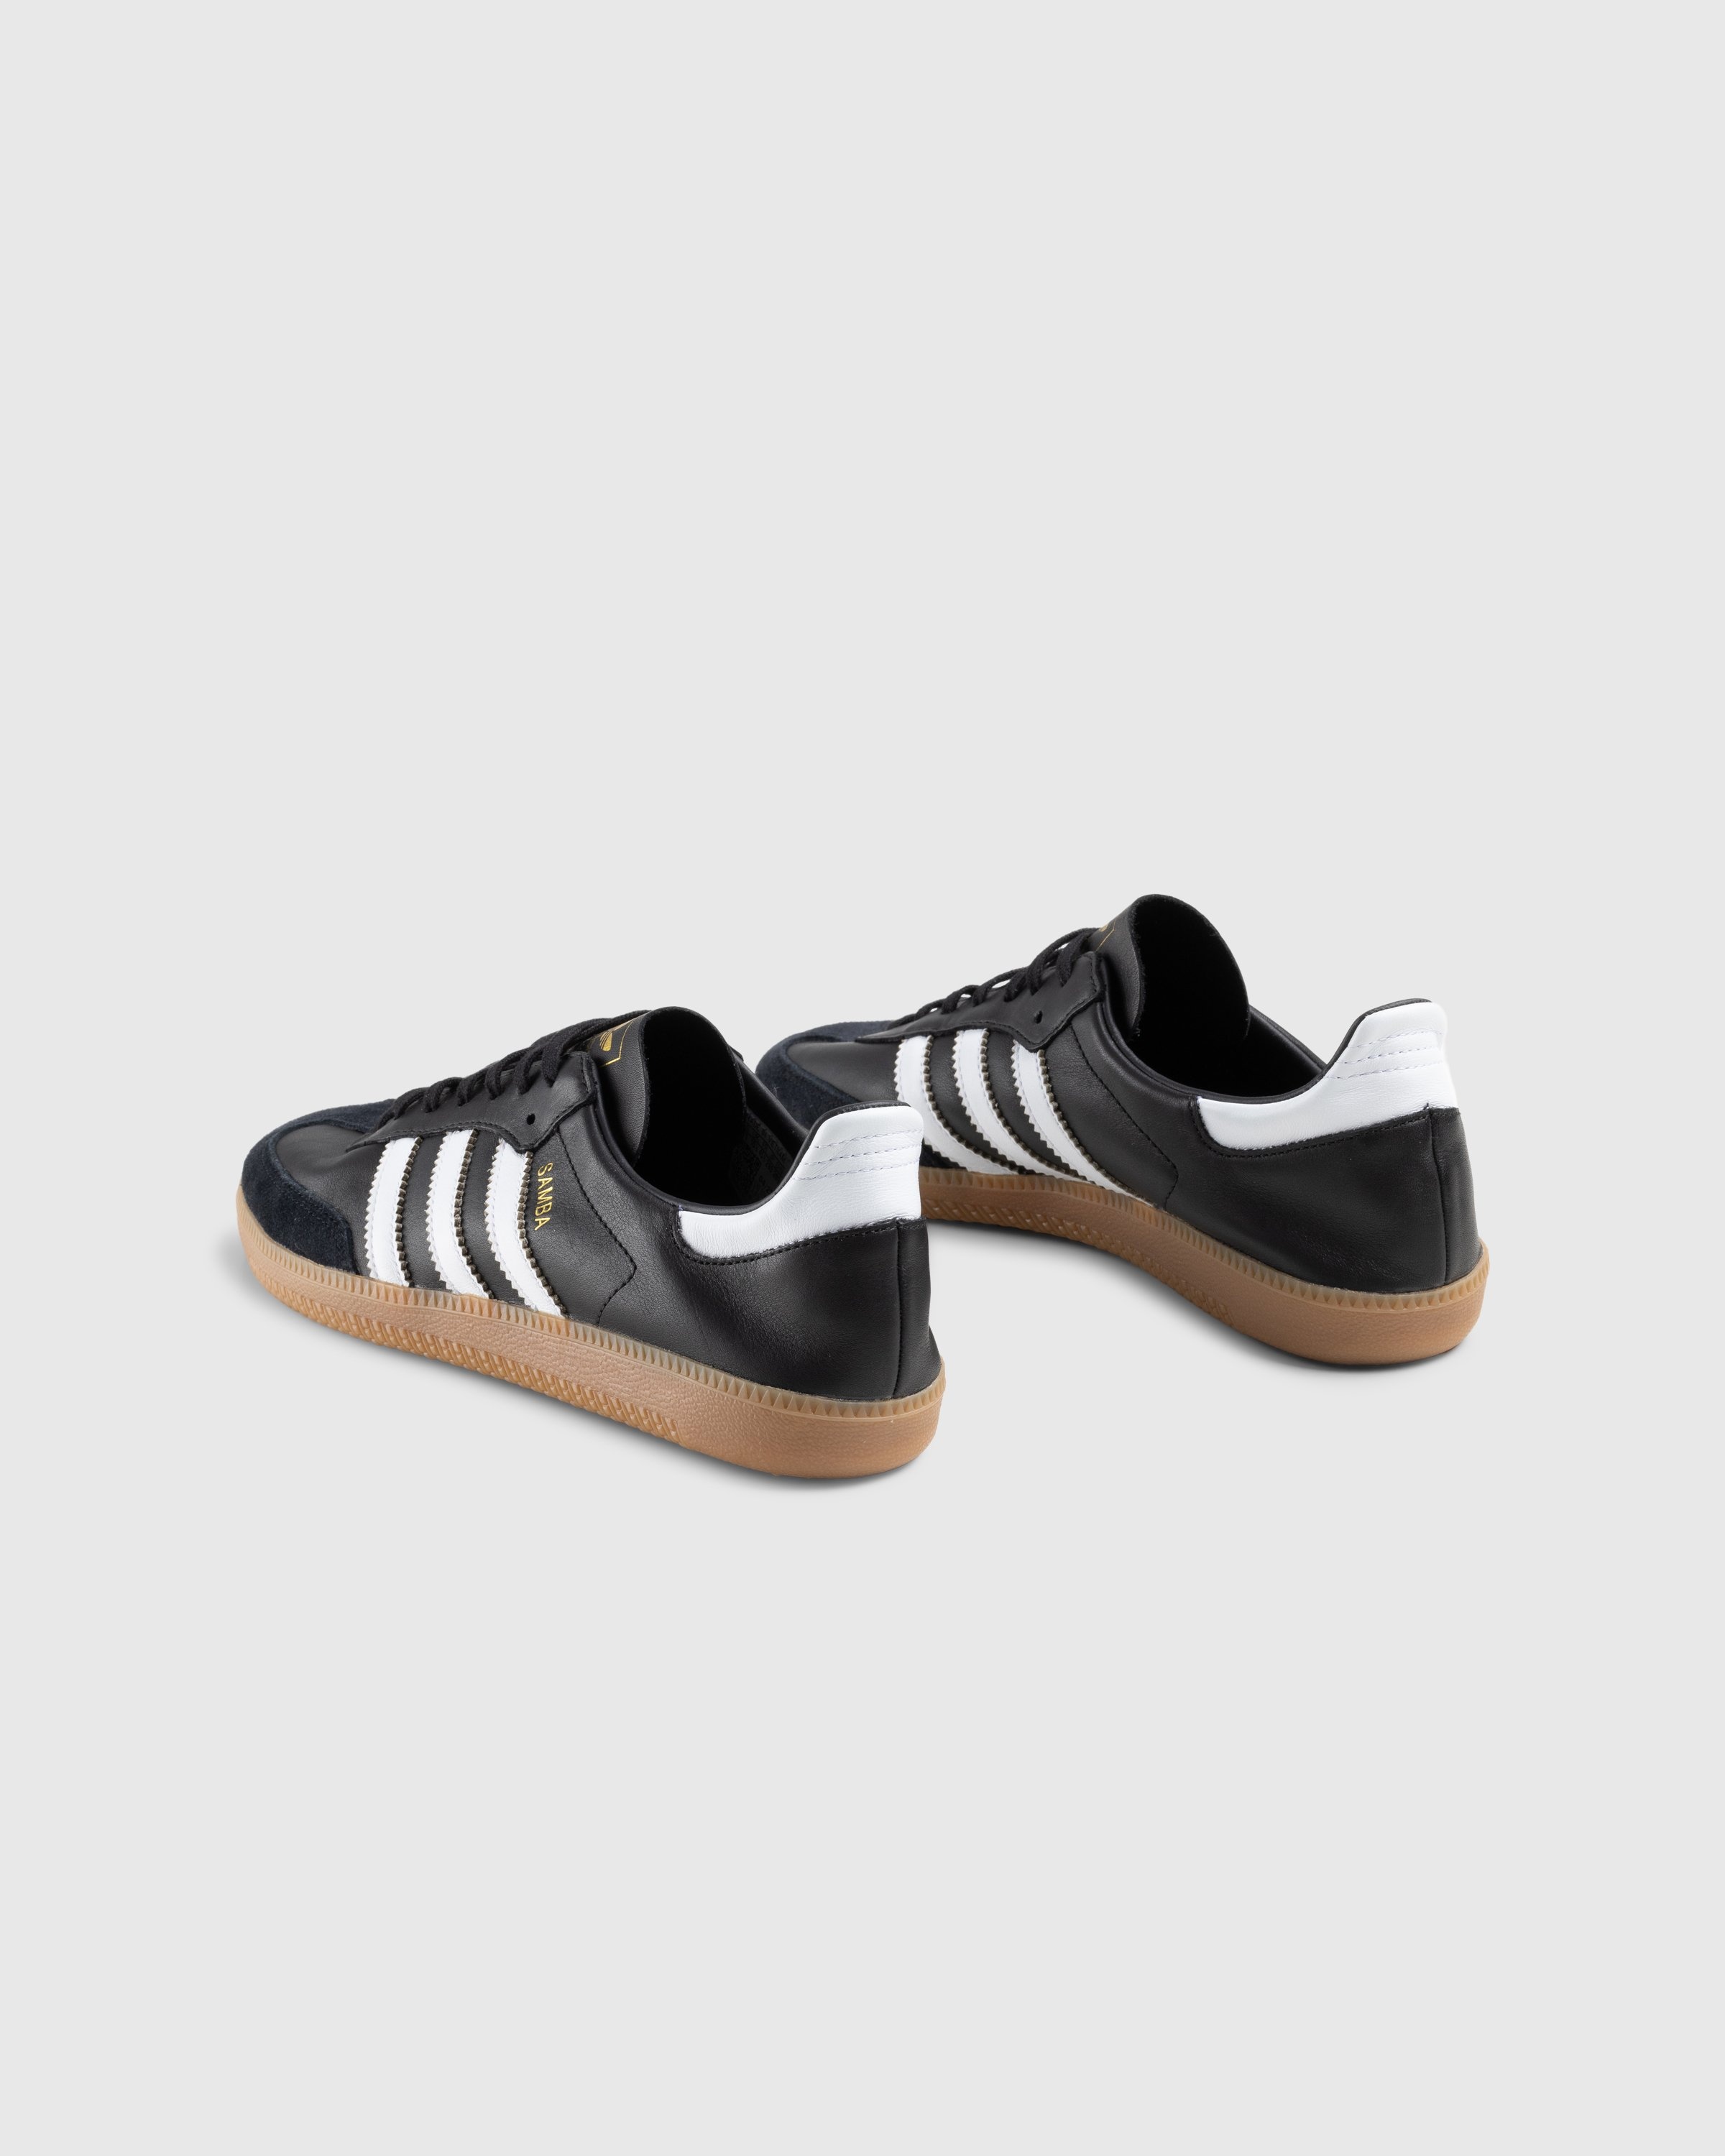 Adidas – Samba Decon Black - Sneakers - Black - Image 4